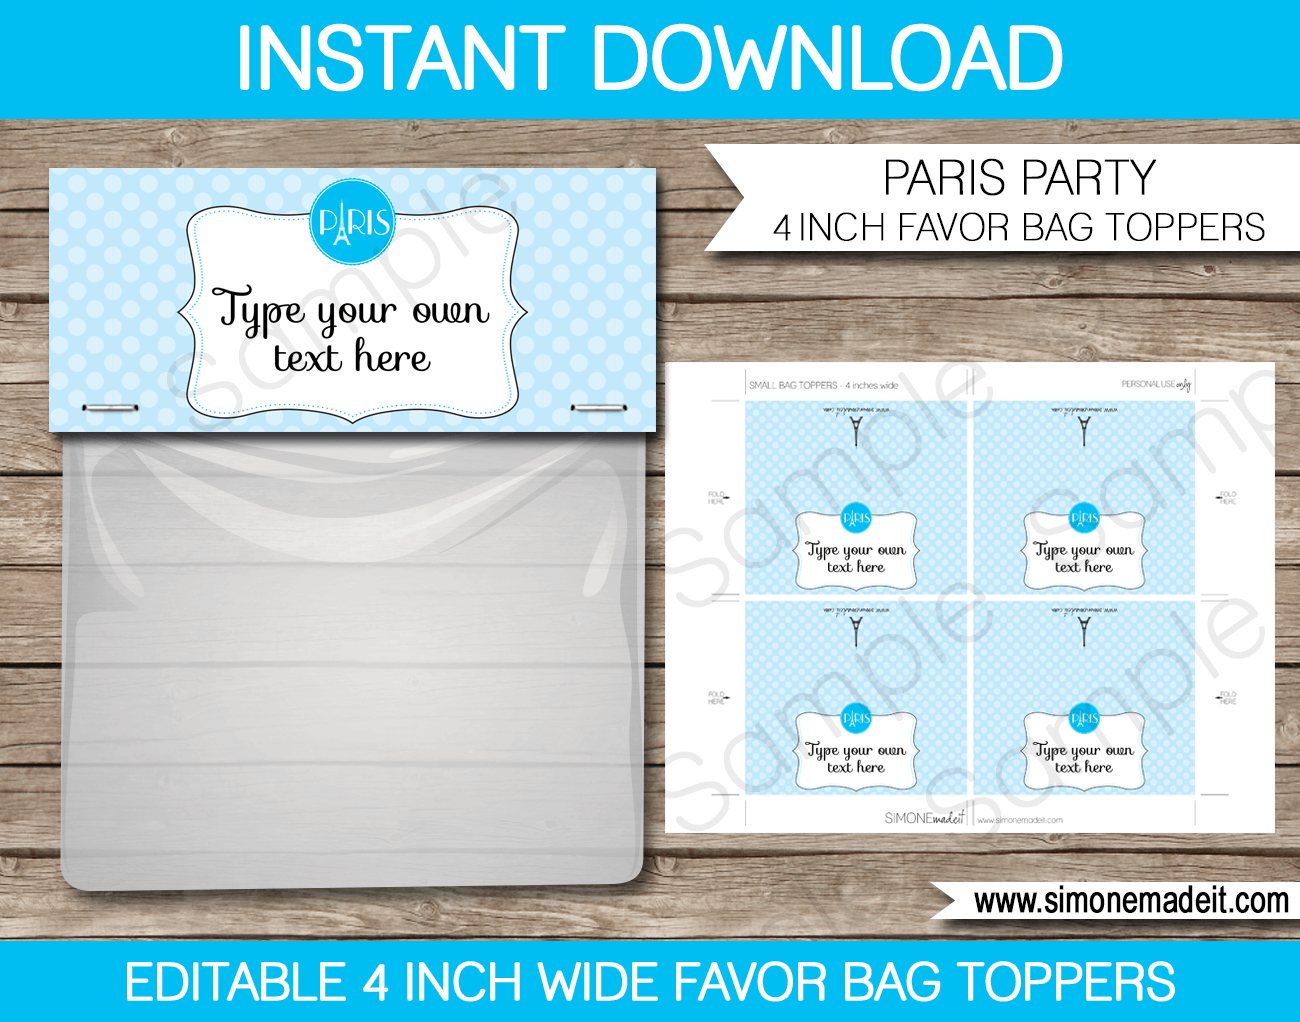 Blue Paris Favor Bag Toppers | Birthday Party | Baby Shower | Editable DIY Template | $3.00 INSTANT DOWNLOAD via SIMONEmadeit.com